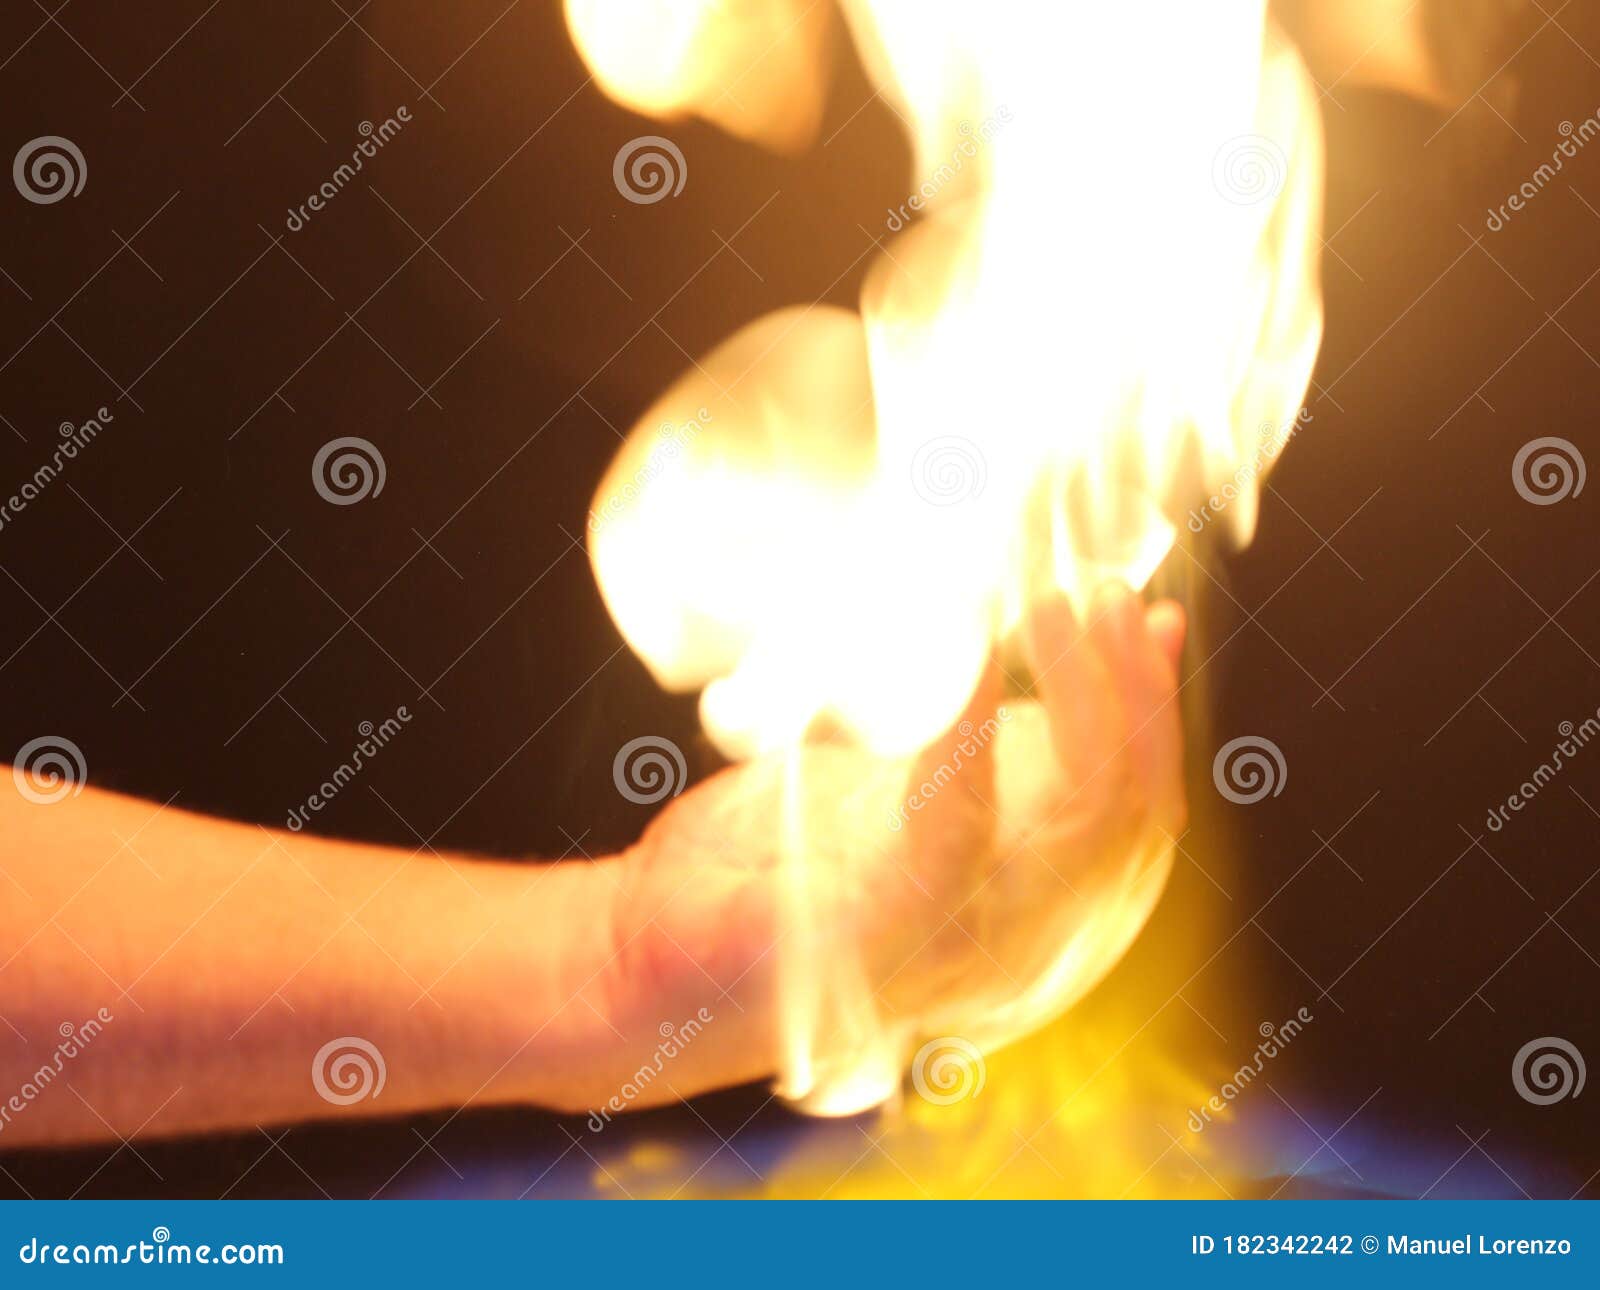 hand flames fire heat fingers burn burn burn nail tight